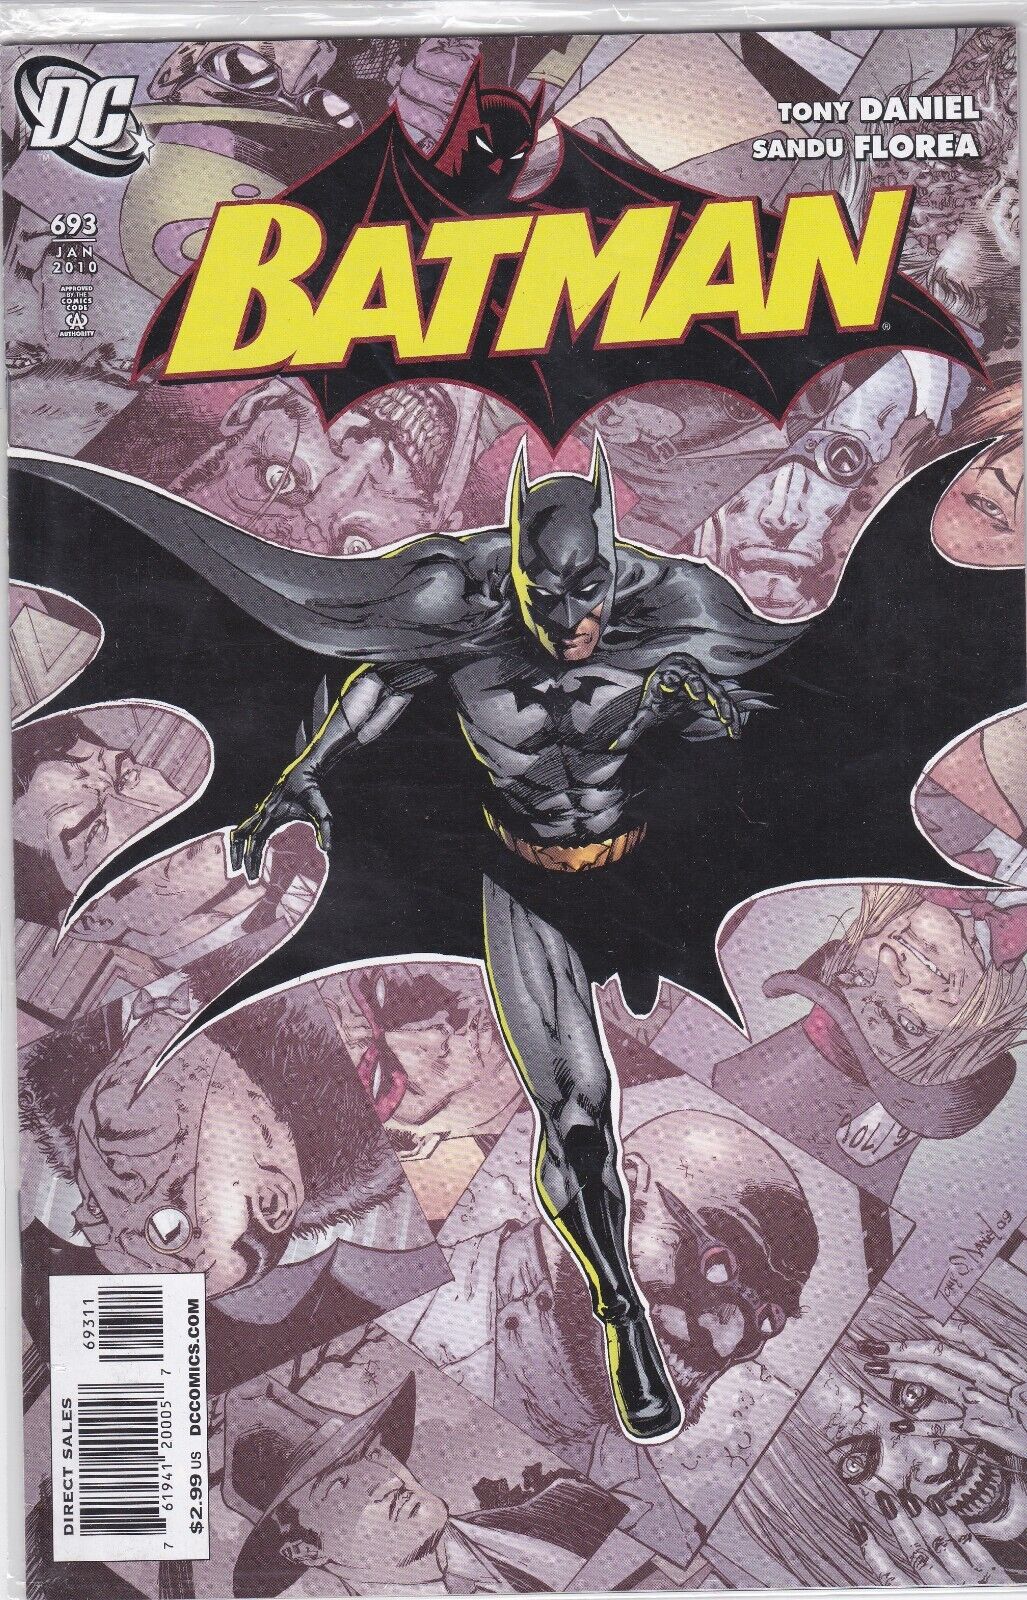 Batman #693 (DC Comics January 2010)